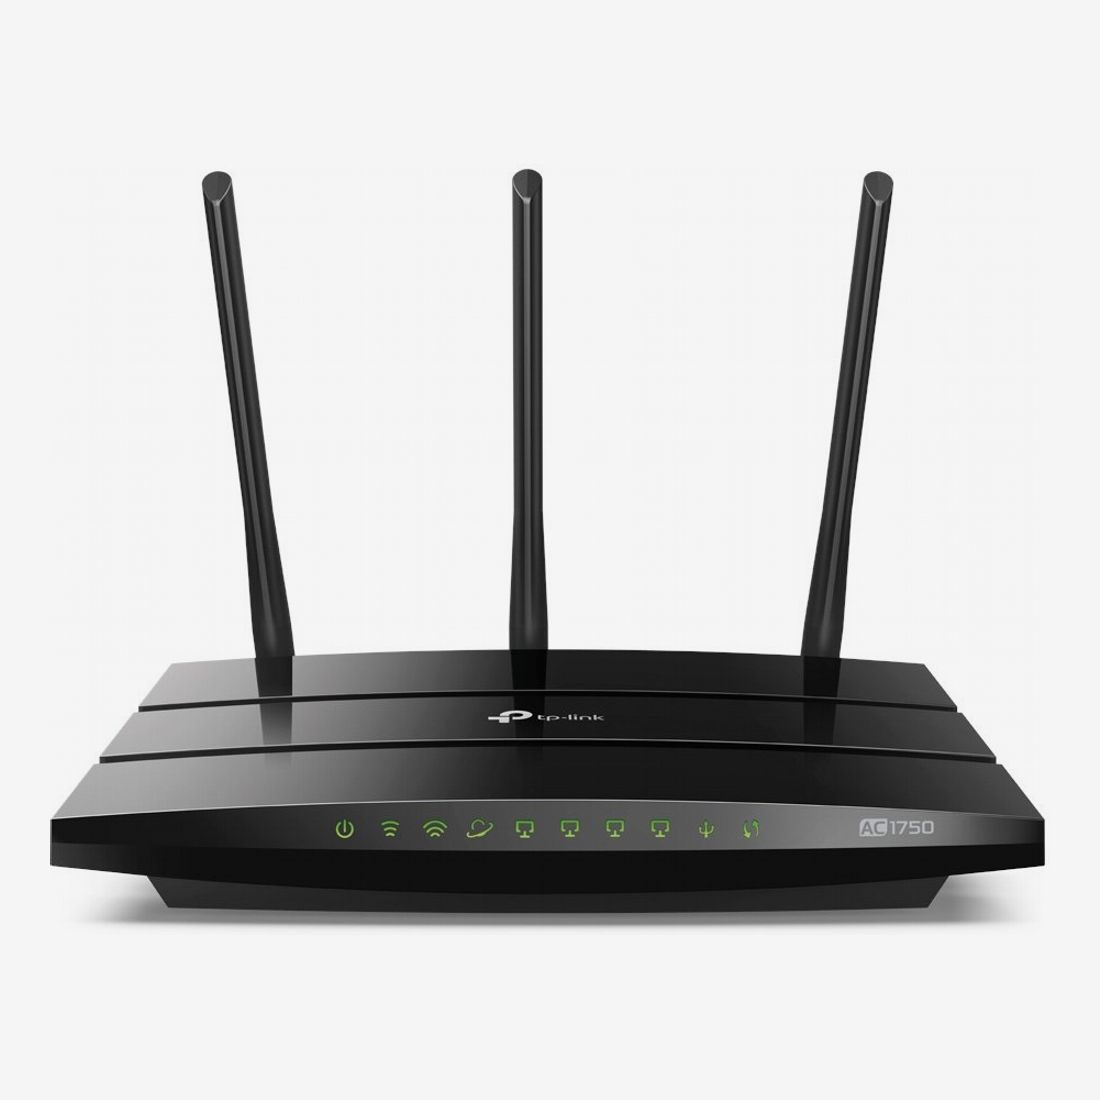 dome ledig stilling Erklæring 7 Best Wi-Fi Routers 2021 | The Strategist